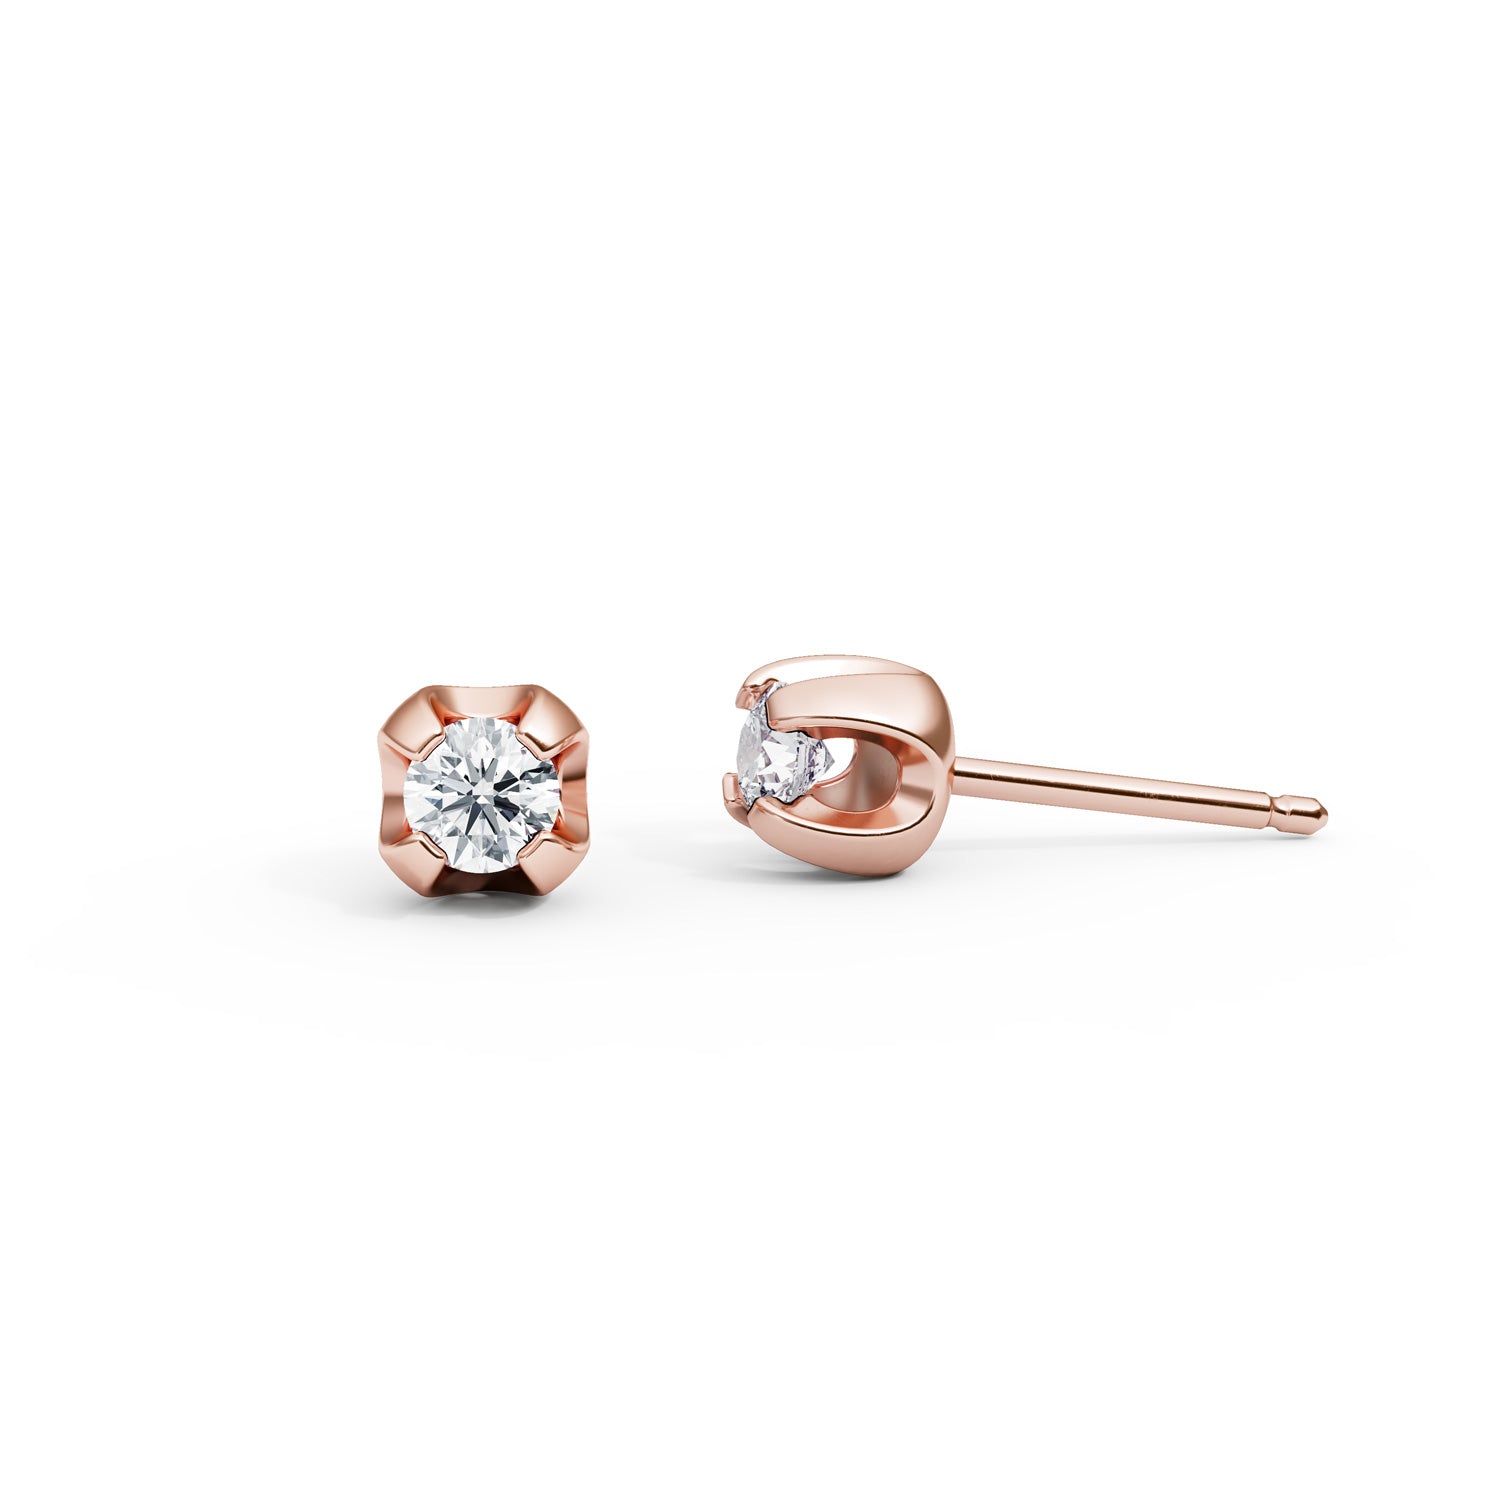 Small diamond studs earrings in 14k rose gold